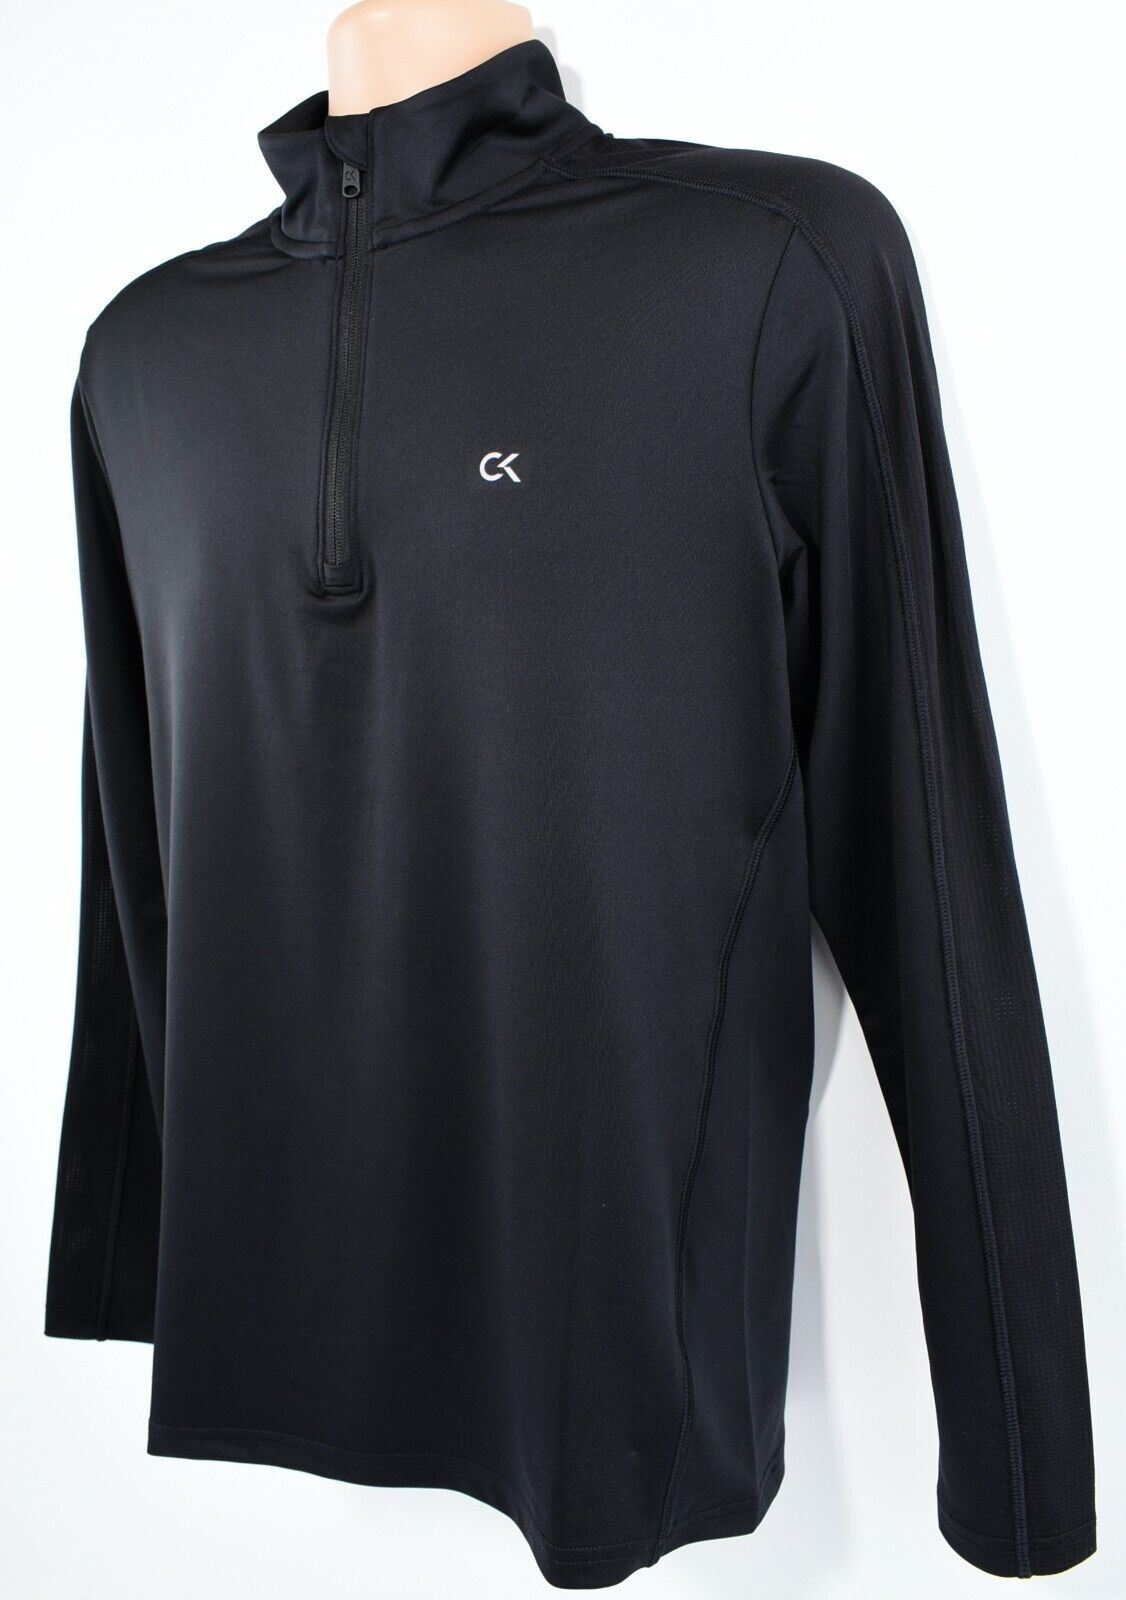 CALVIN KLEIN Performance Men's 1/4 Zip Neck Long Sleeve Top, Black, size S